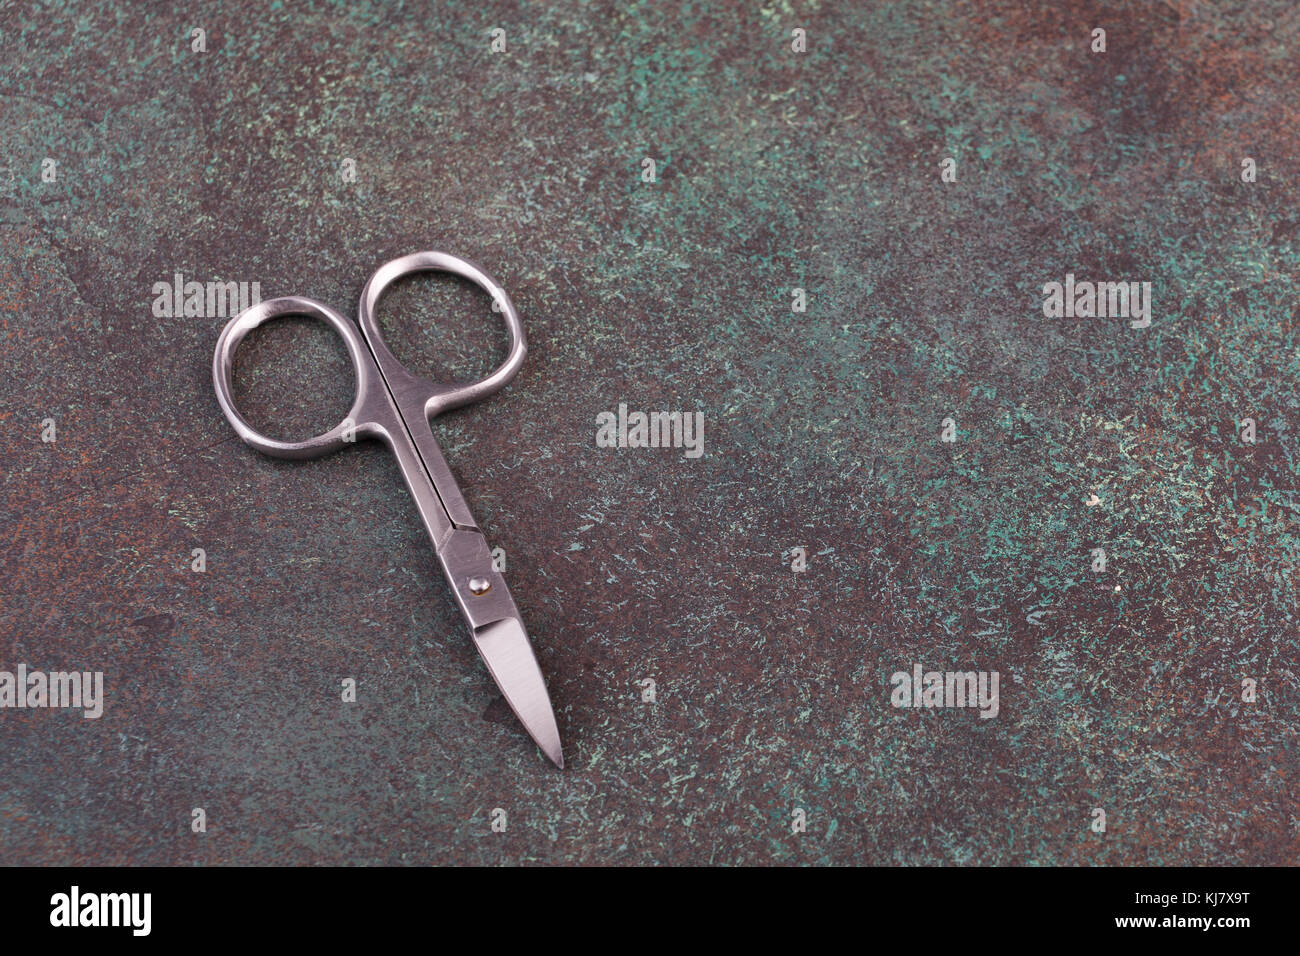 manicure scissors on a textured dark background Stock Photo